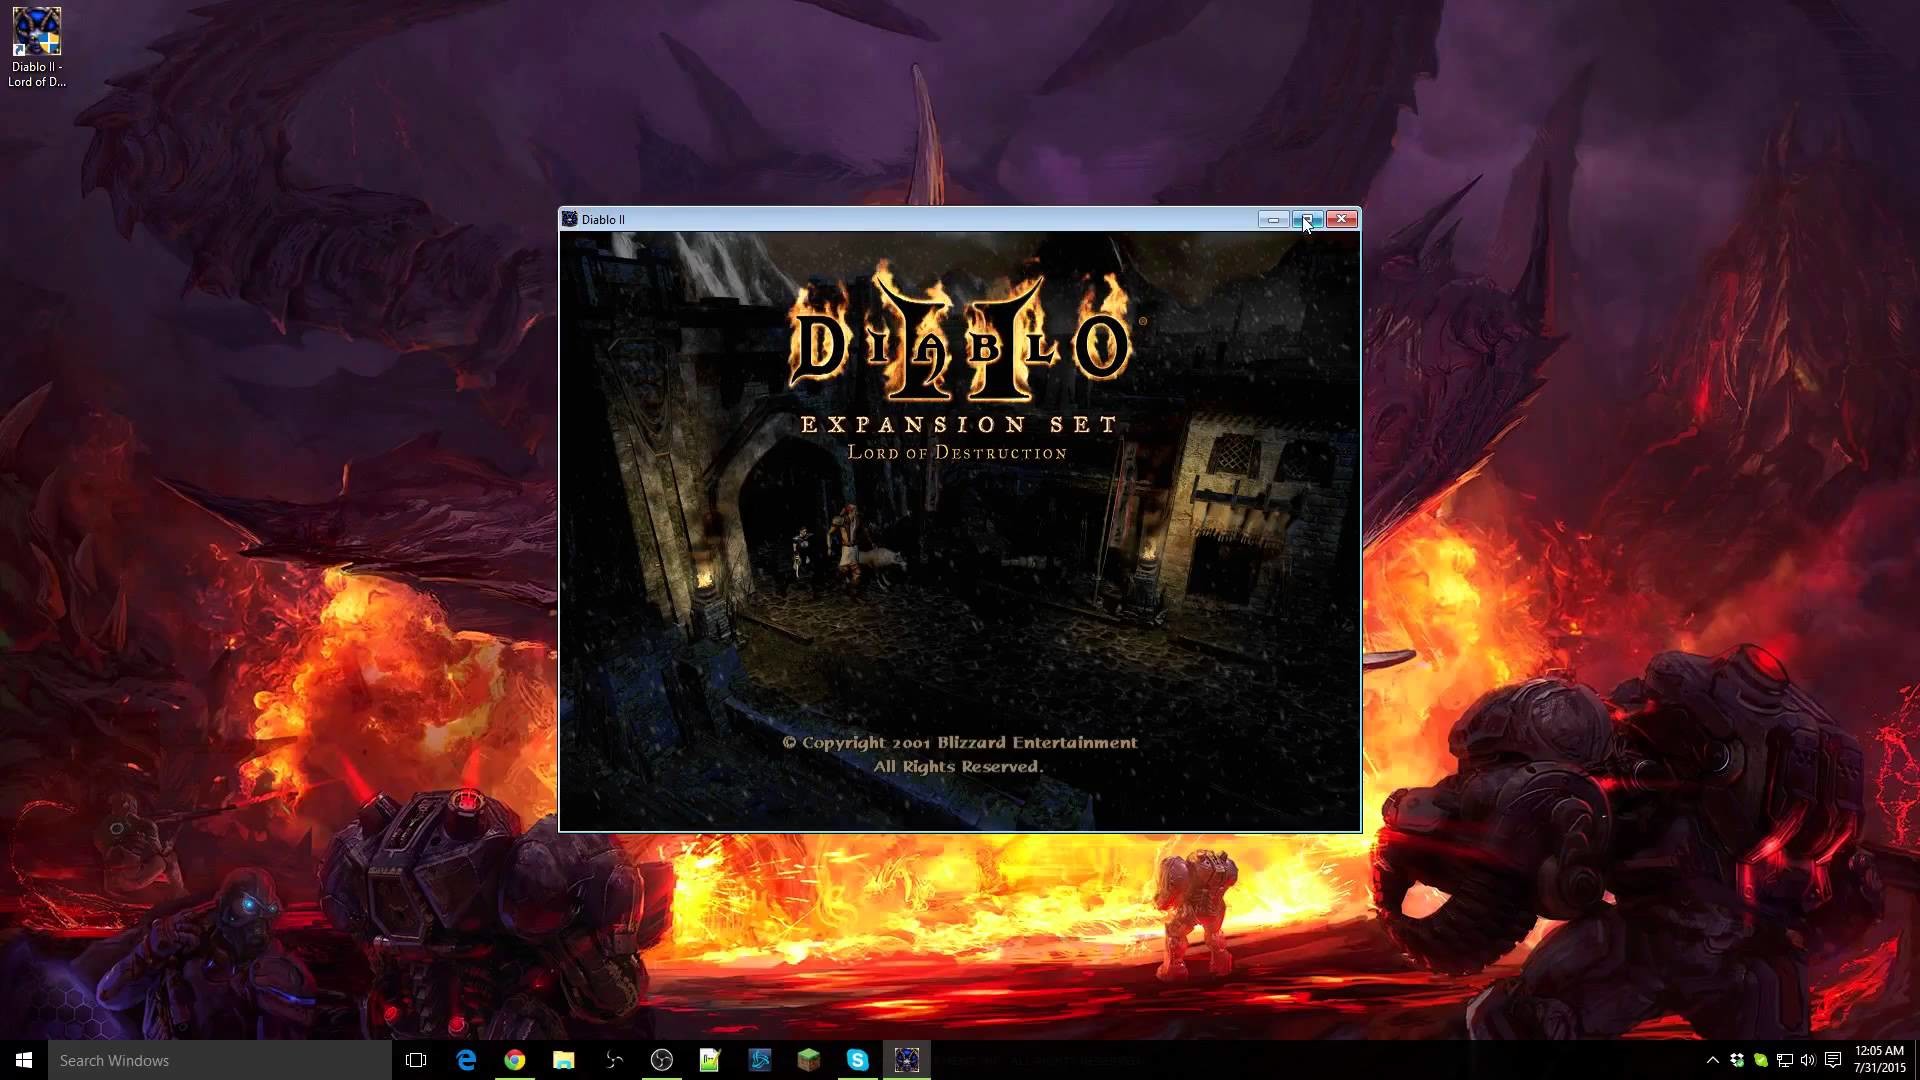 1920x1080 How to play Diablo II LoD on Windows 10 (Windowed Fullscreen) - YouTube